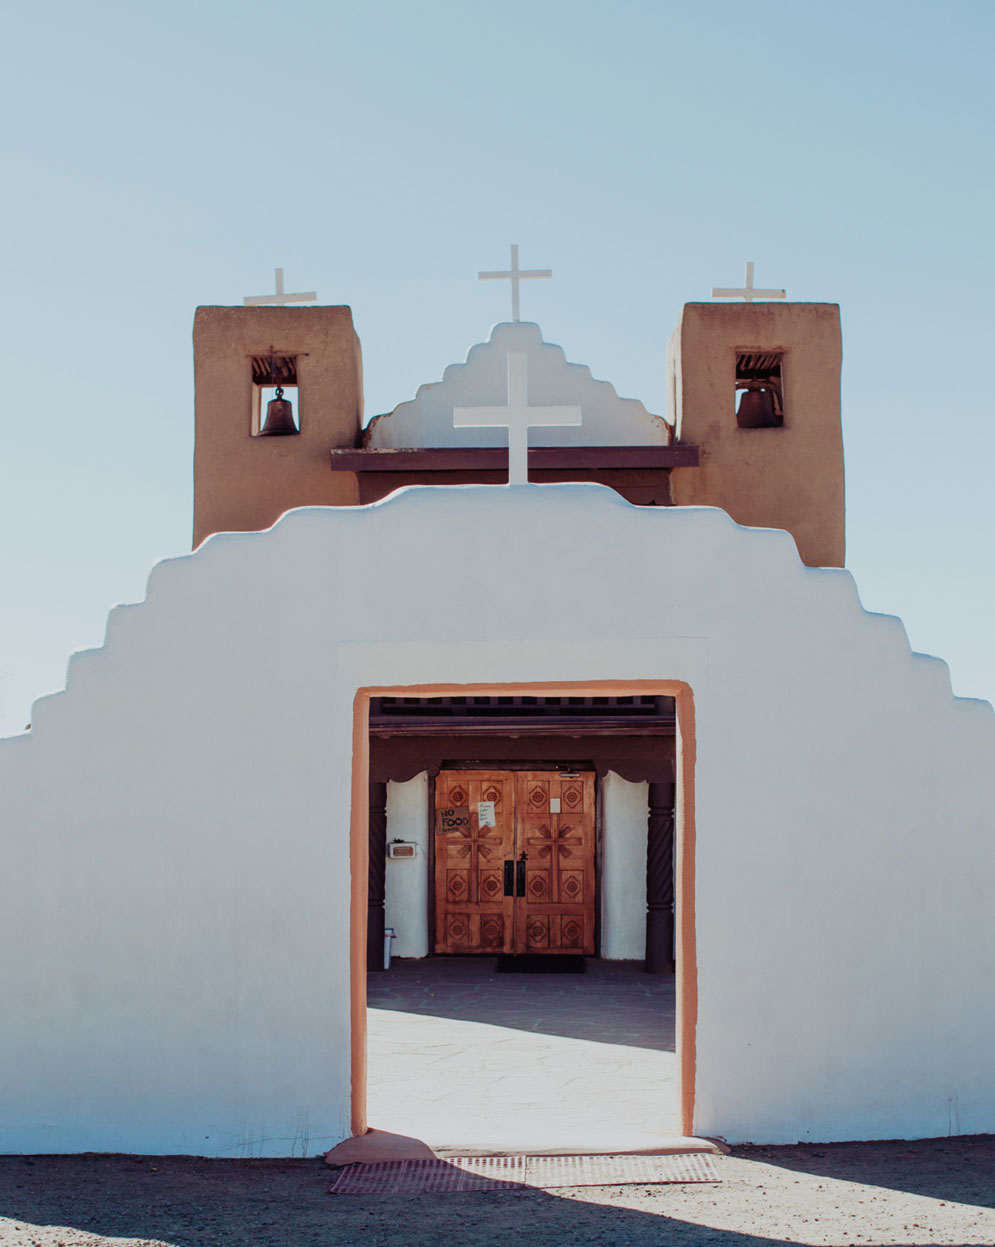 Saint Gerome Church in Taos Pueblo, New Mexico.